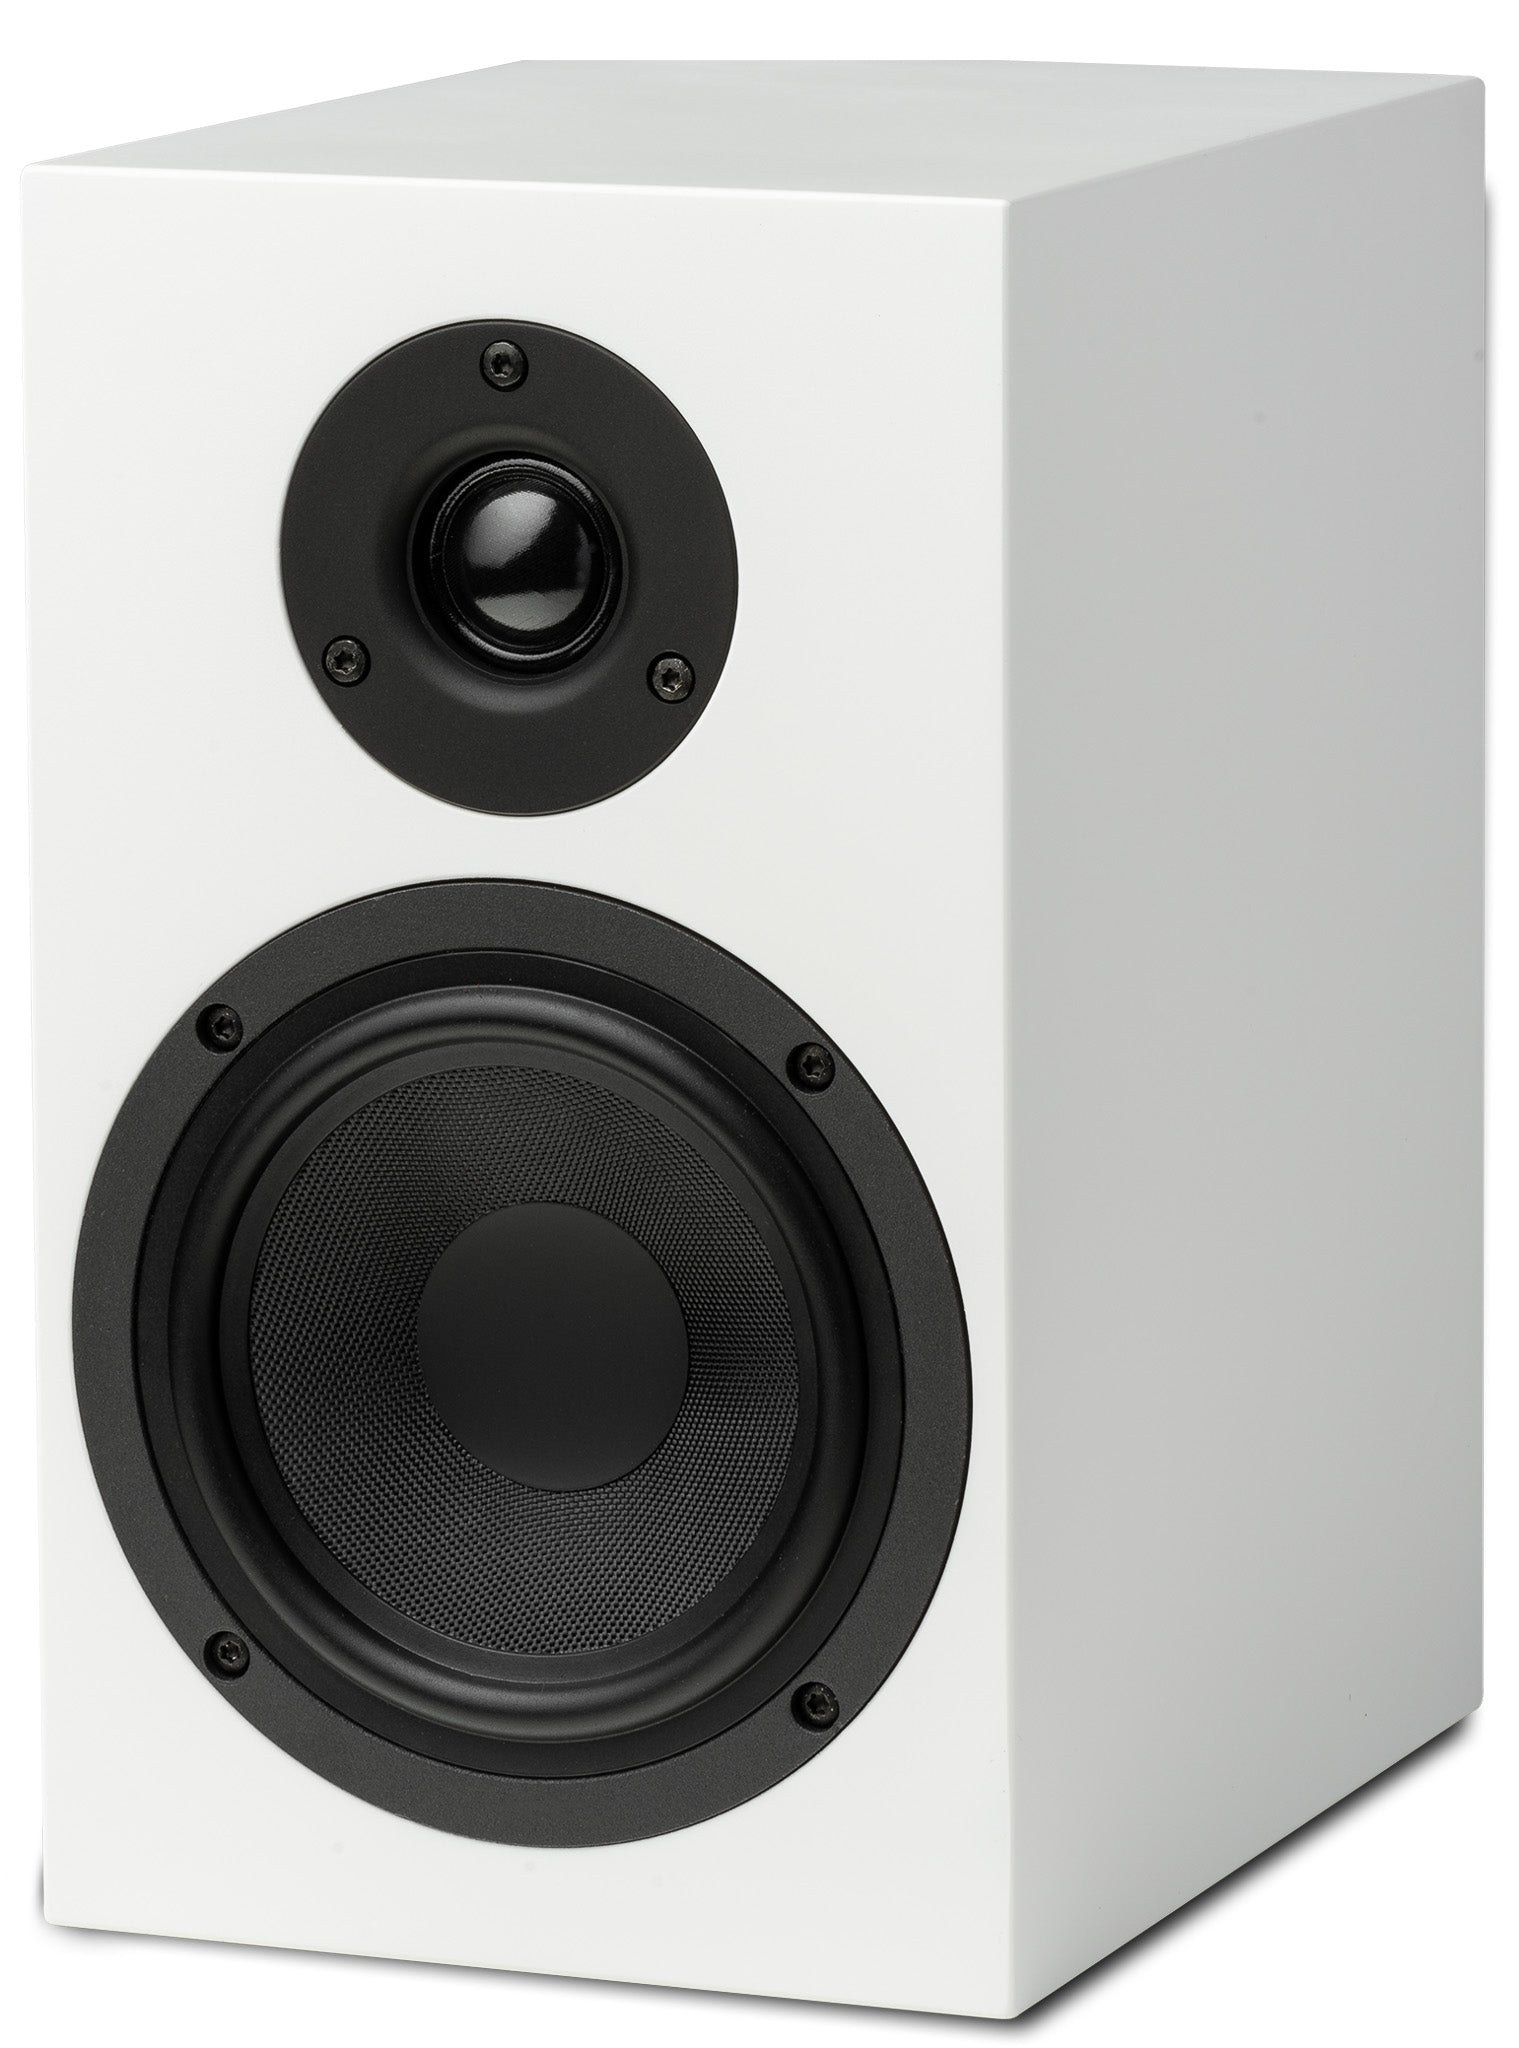 Pro-Ject Speaker Box 5 S2 pair of pedestal speakers